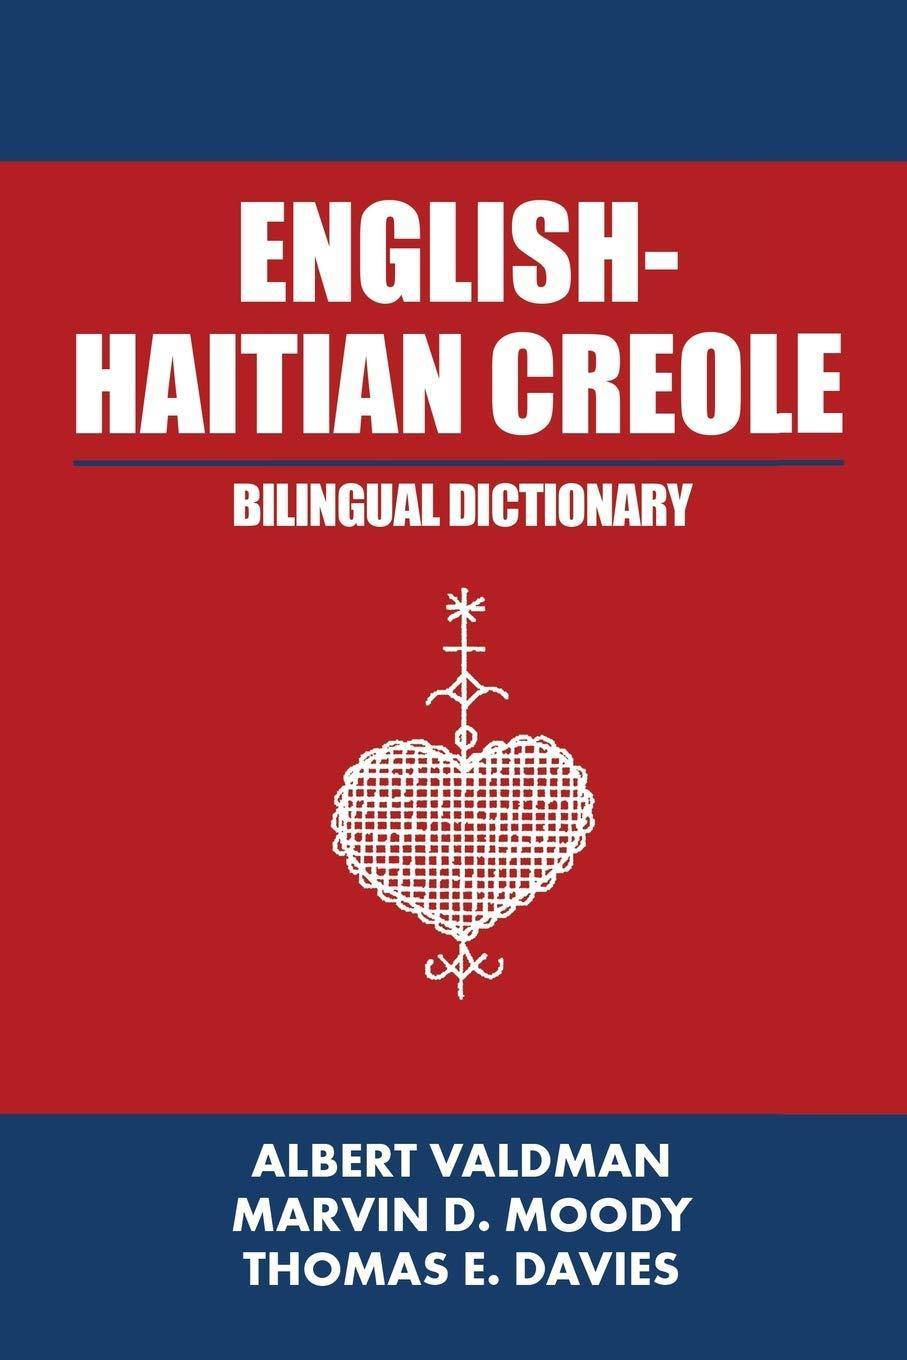 English-Haitian Creole Bilingual Dictionary - SureShot Books Publishing LLC